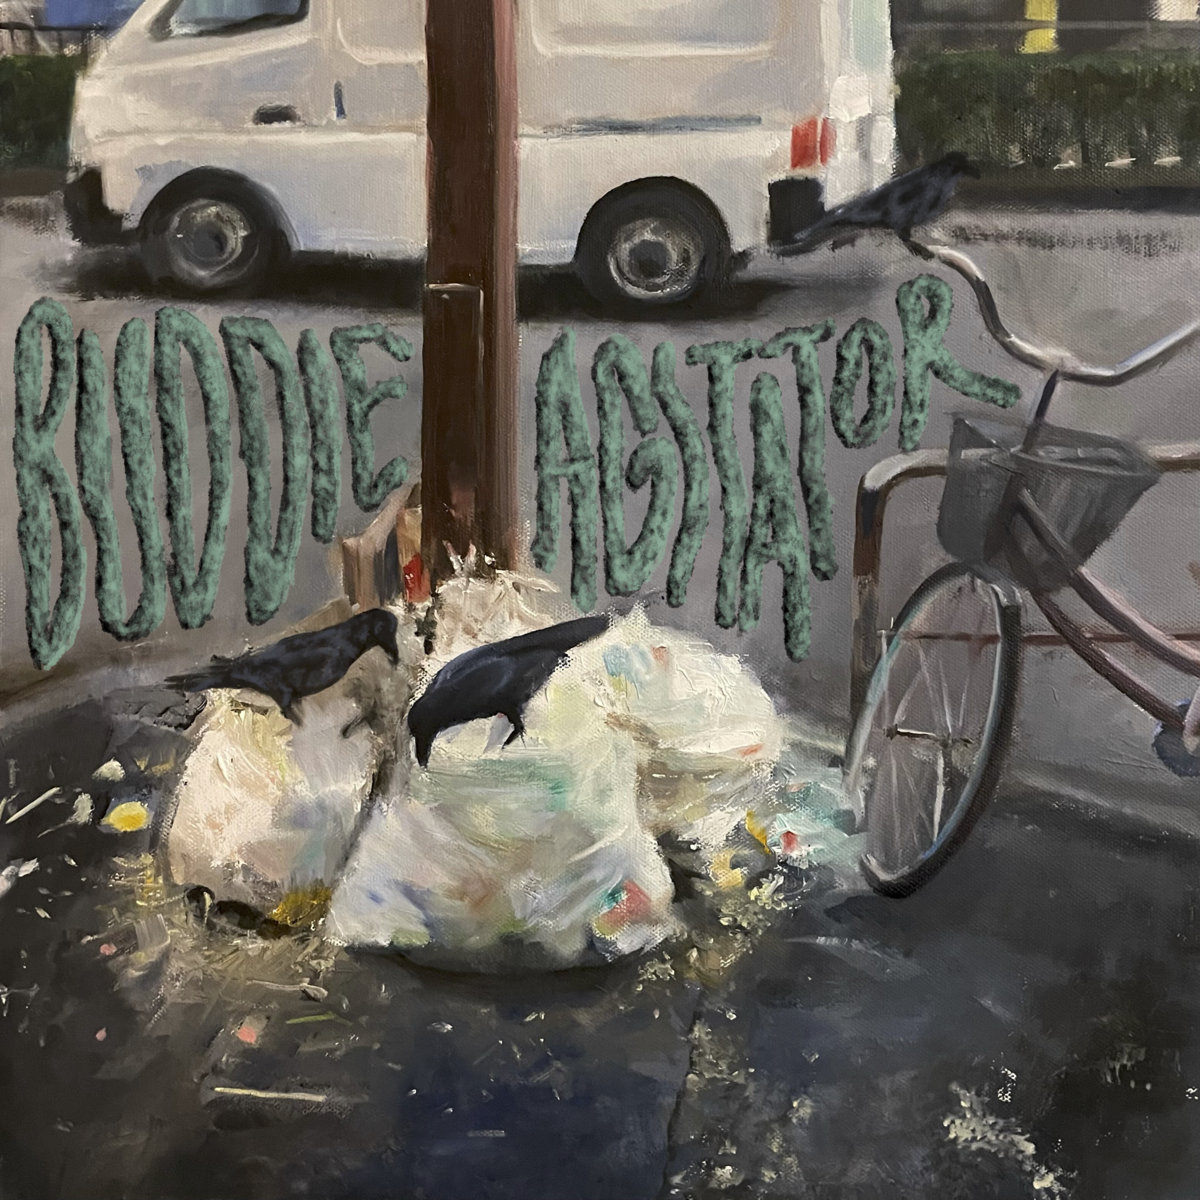 buddie agitator album art - two crows on garbage bags